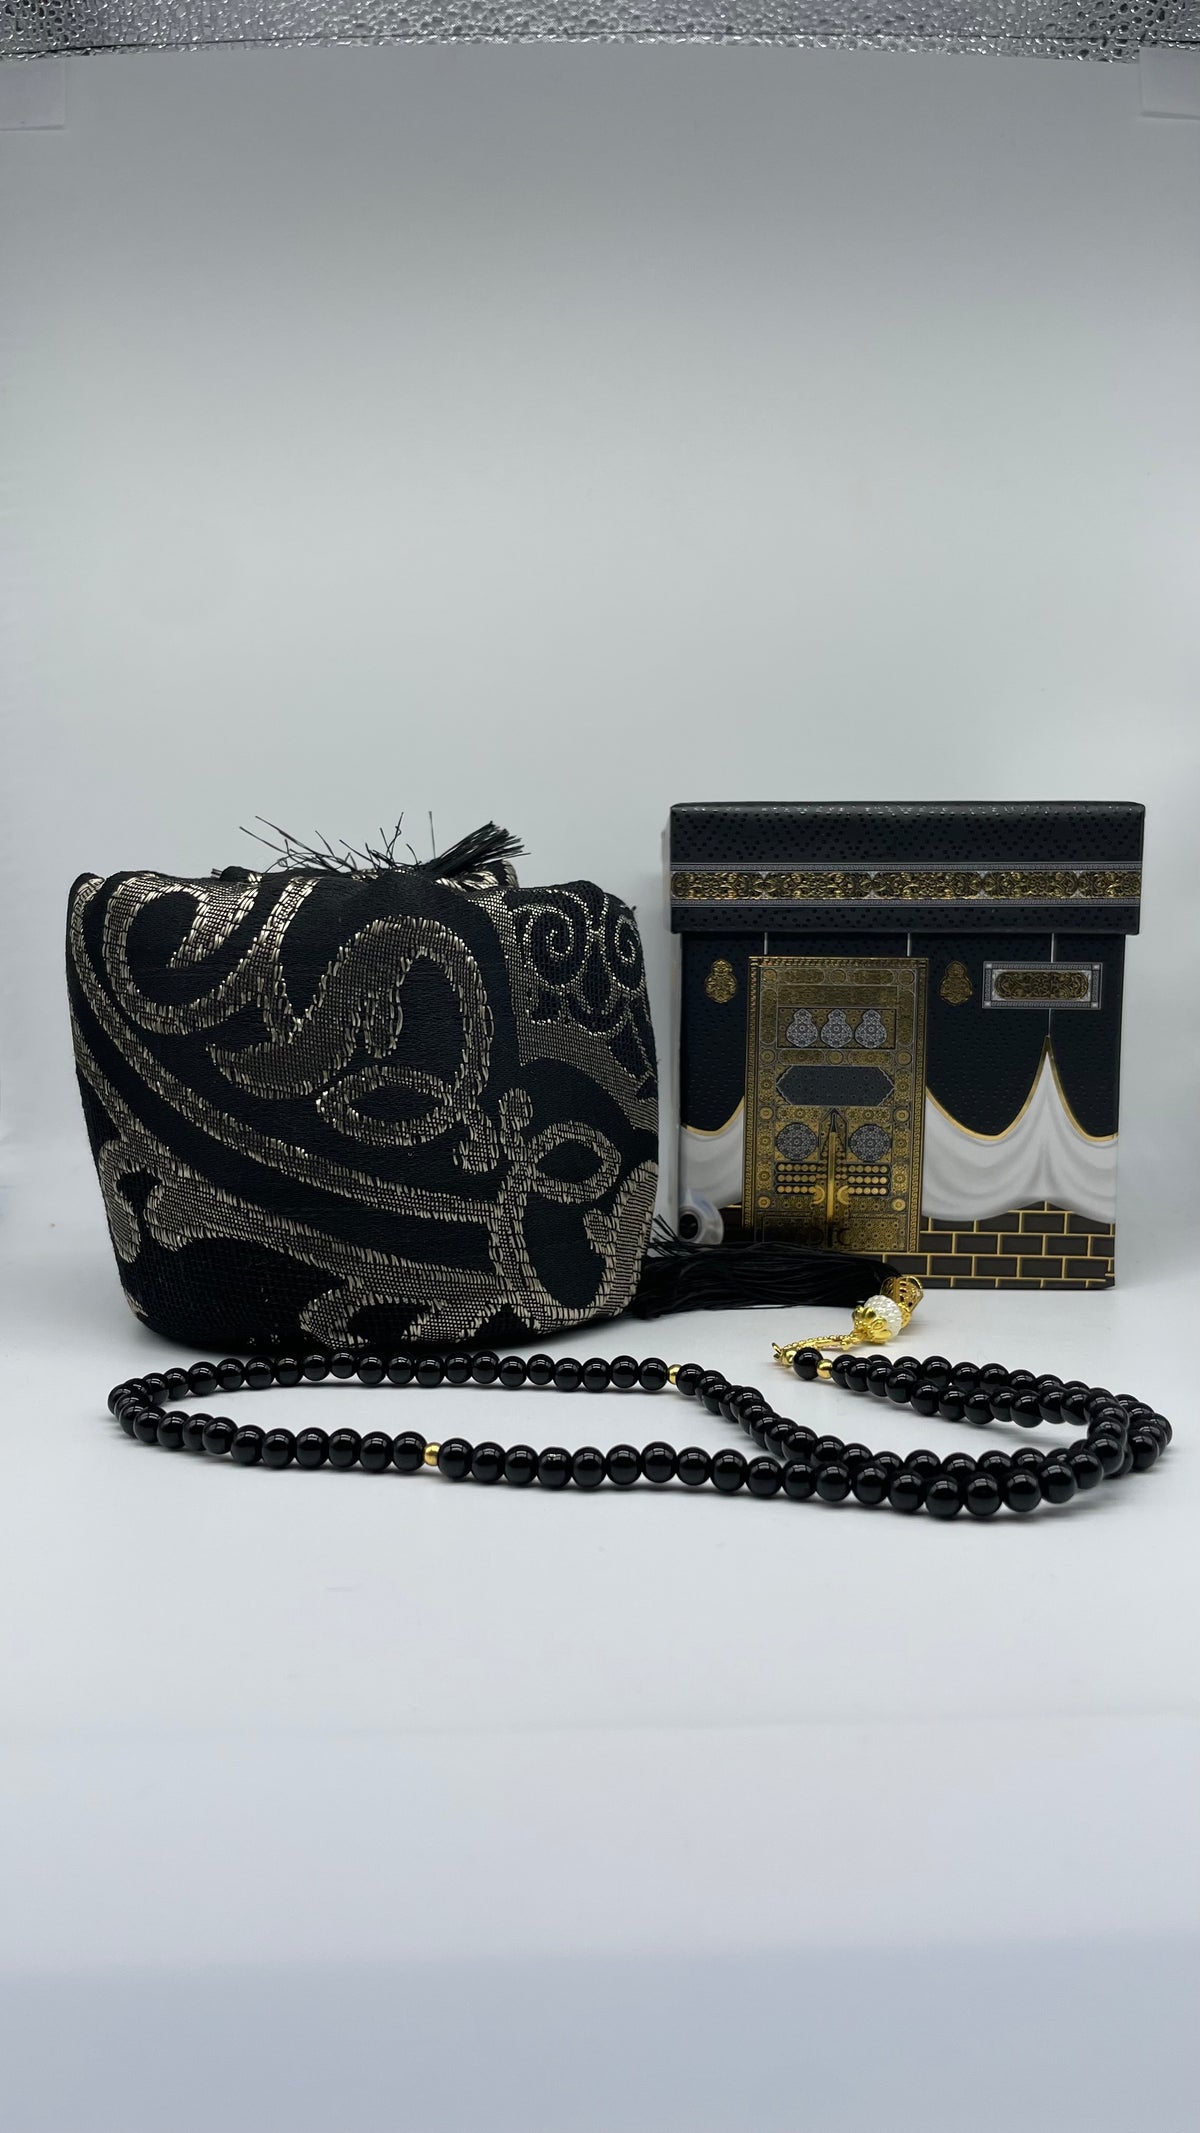 Kaaba Gift Box